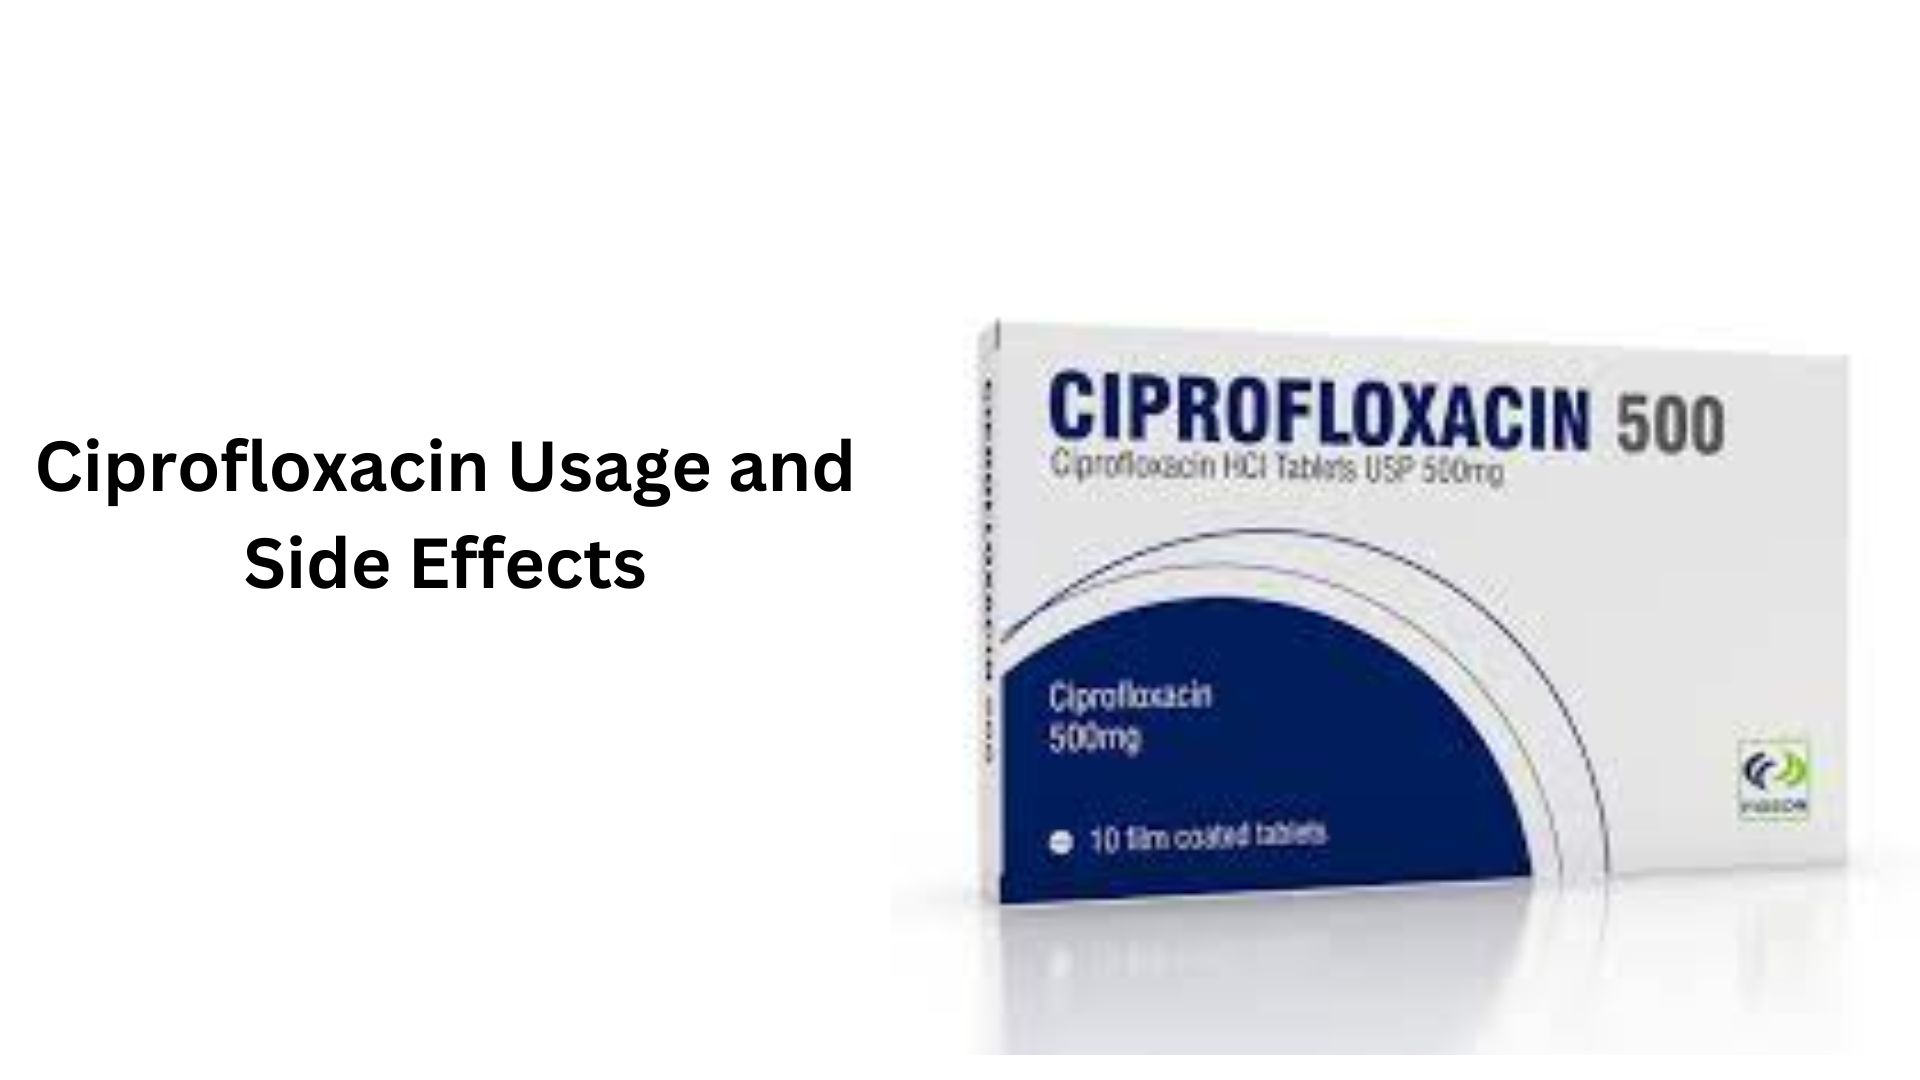 Ciprofloxacin Usage and Side Effects